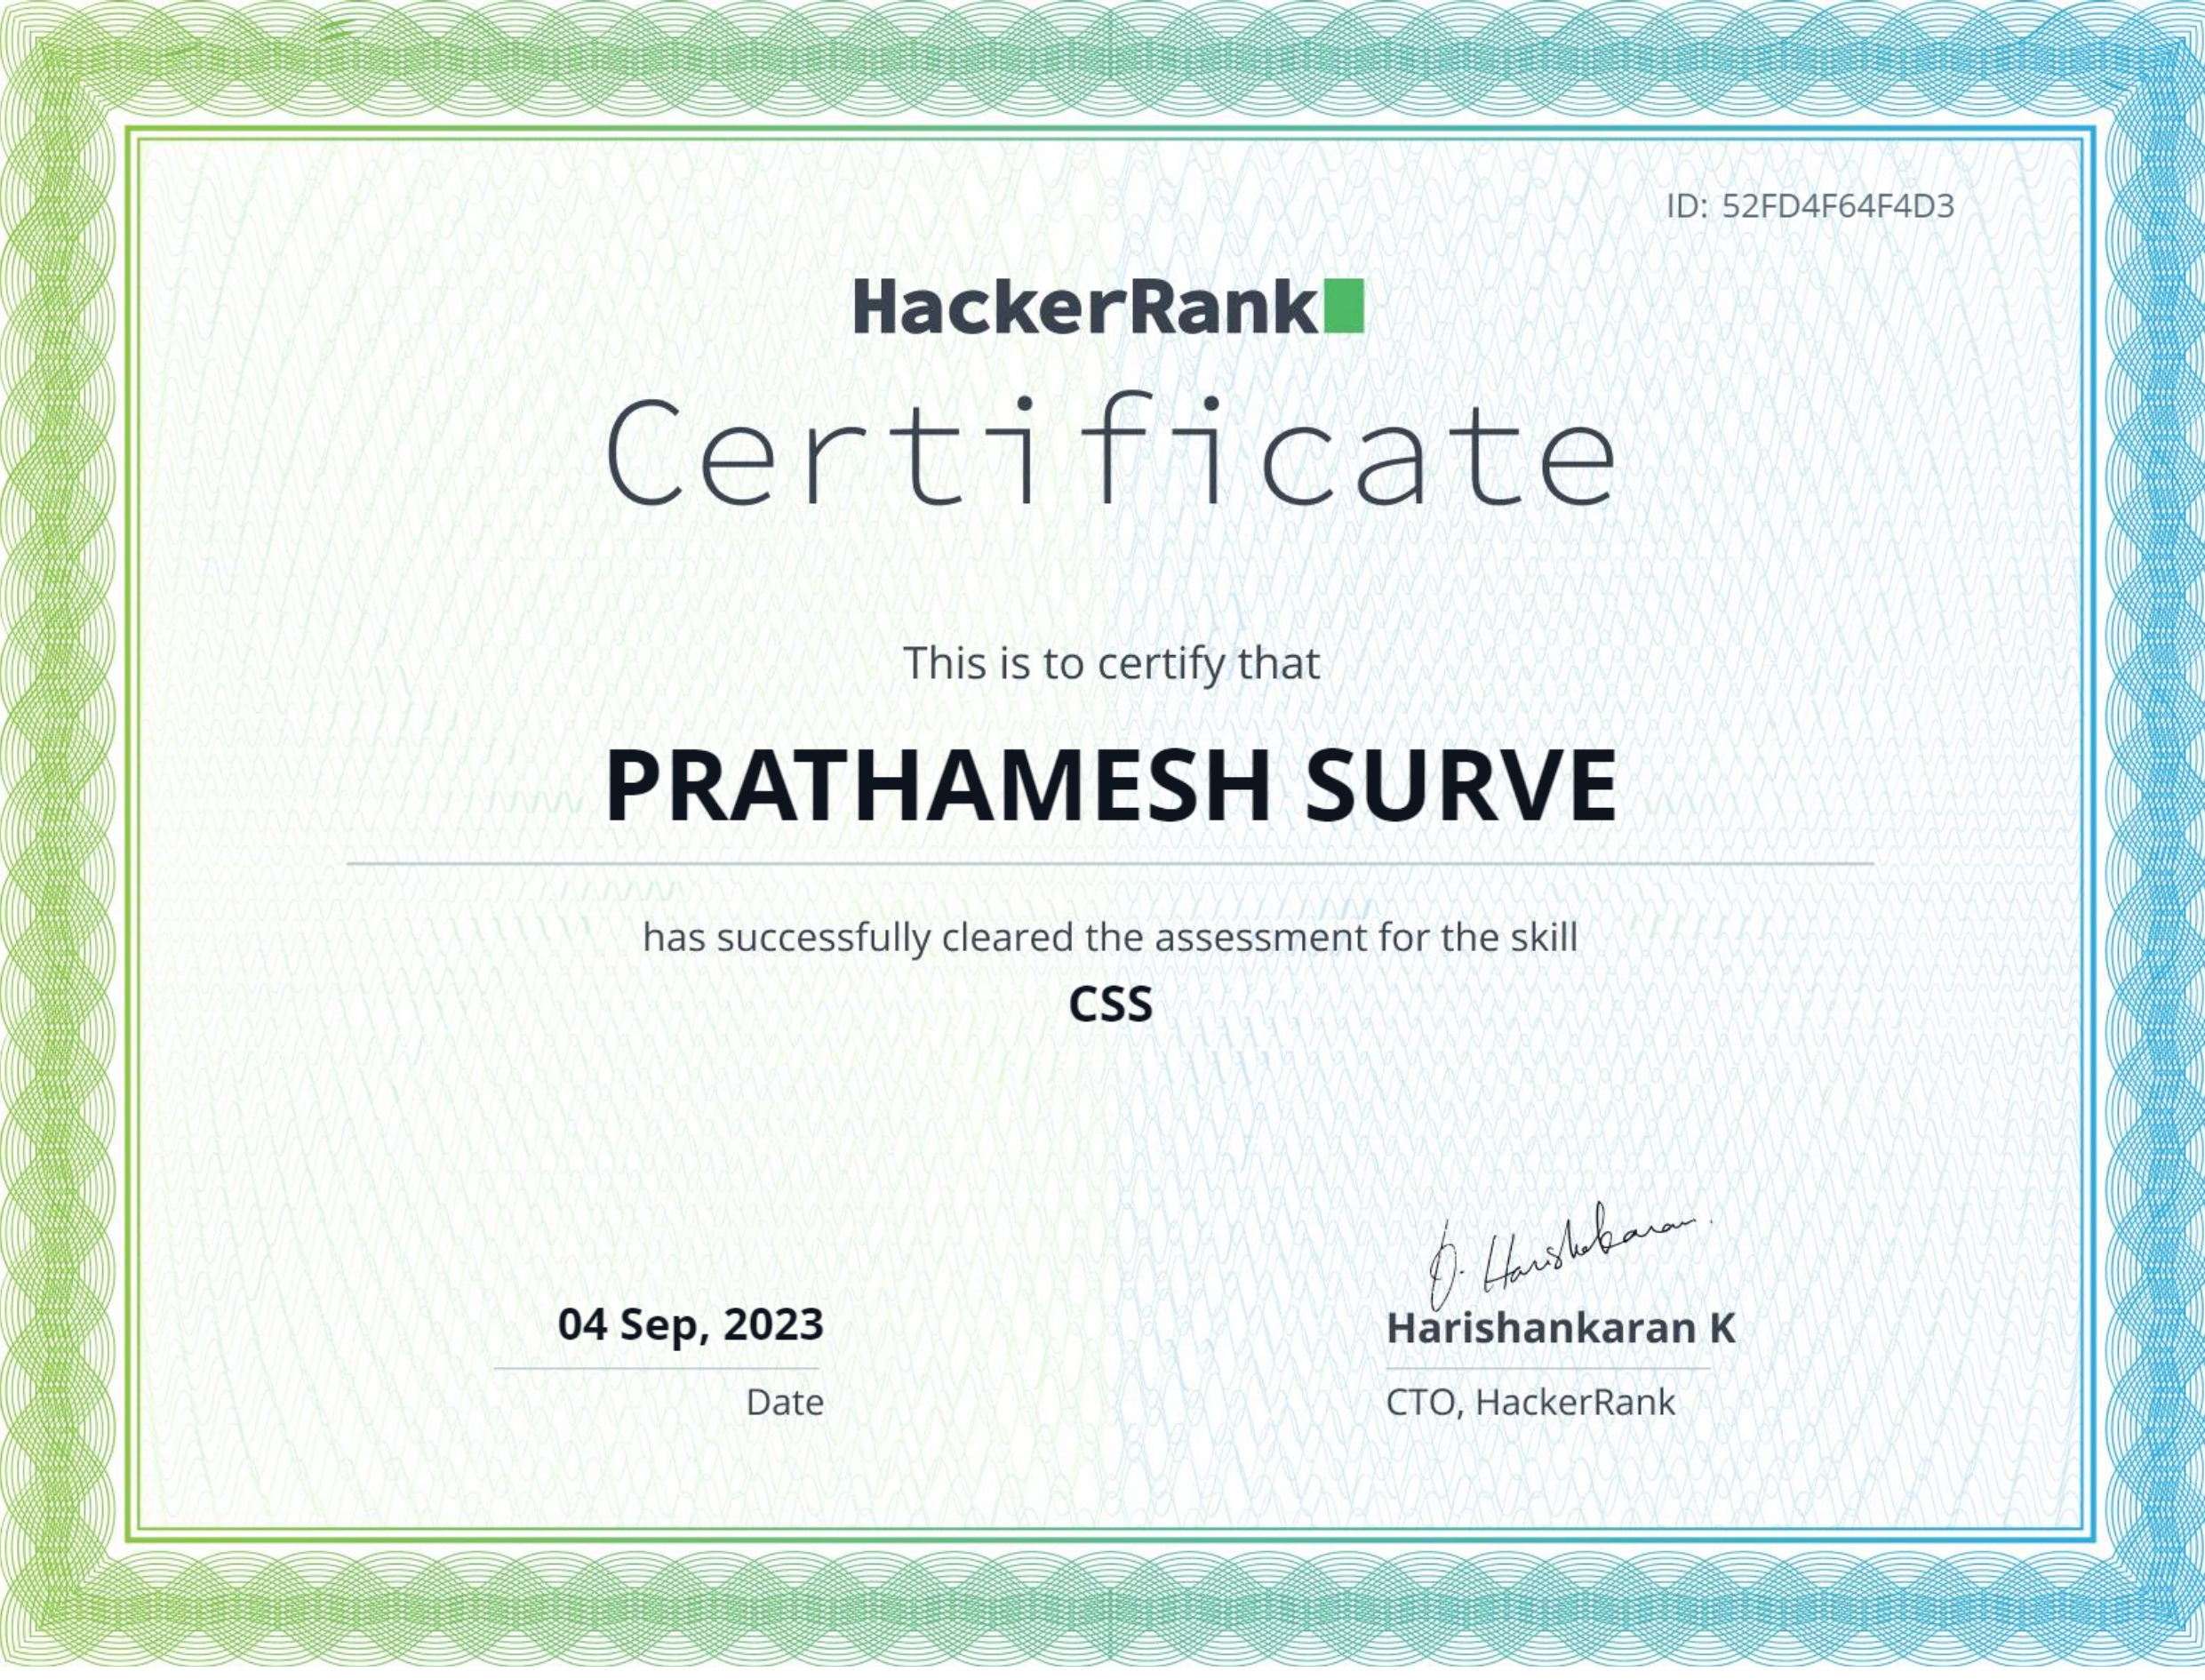 CSS (Basic) certificate by HackerRank